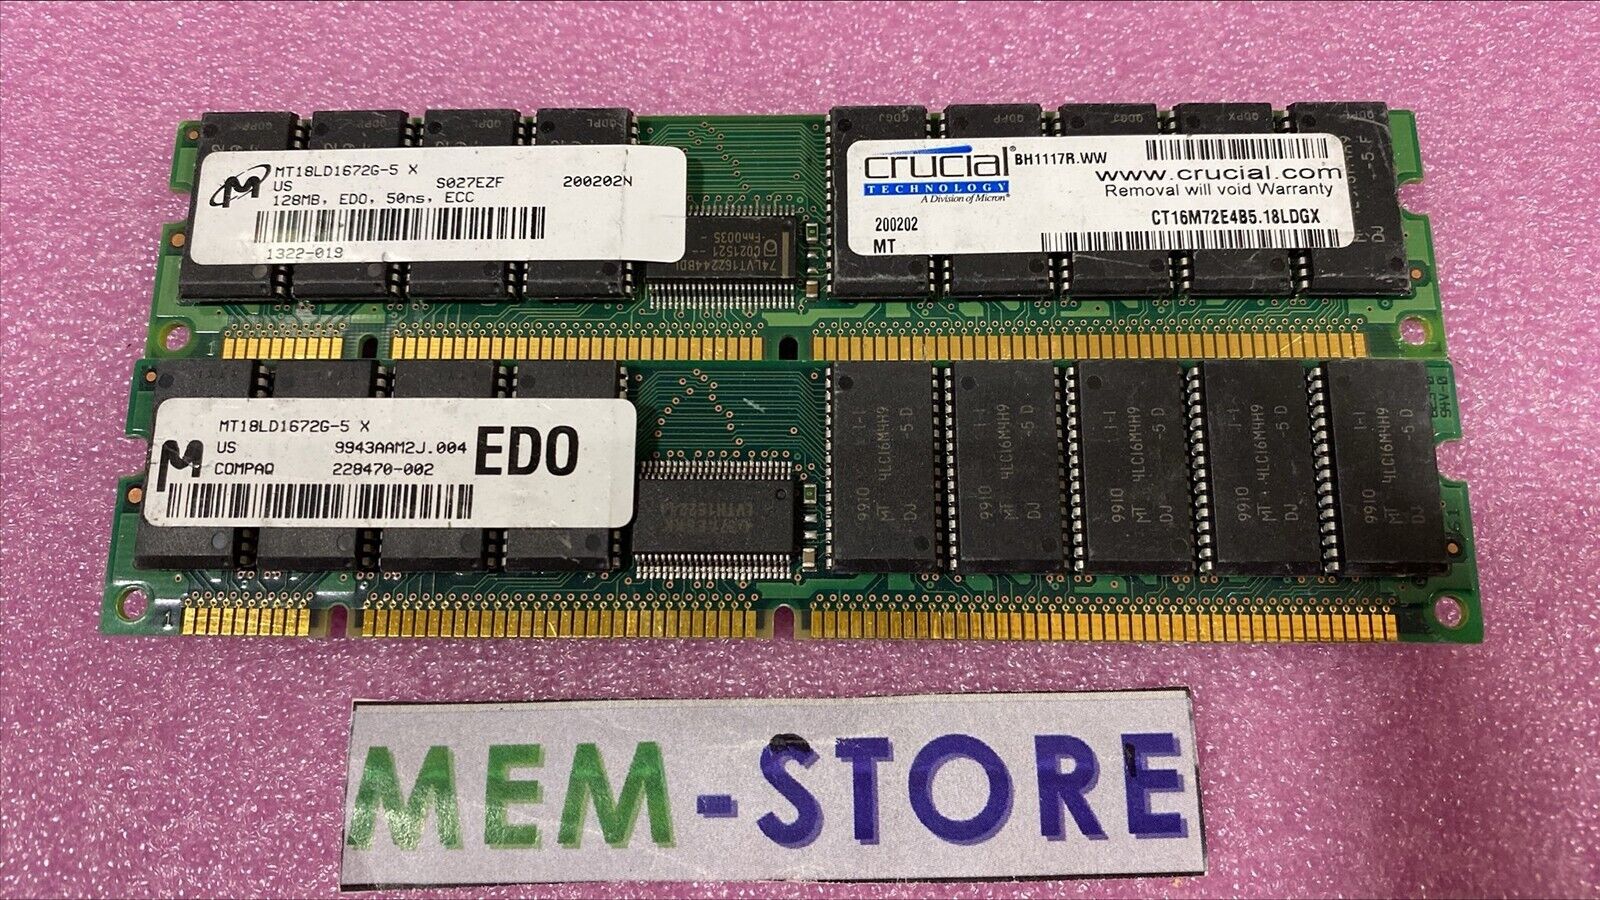 228470-002 Compaq/HP Original 256MB 2x128MB Buffered ECC EDO DIMM Memory RAM